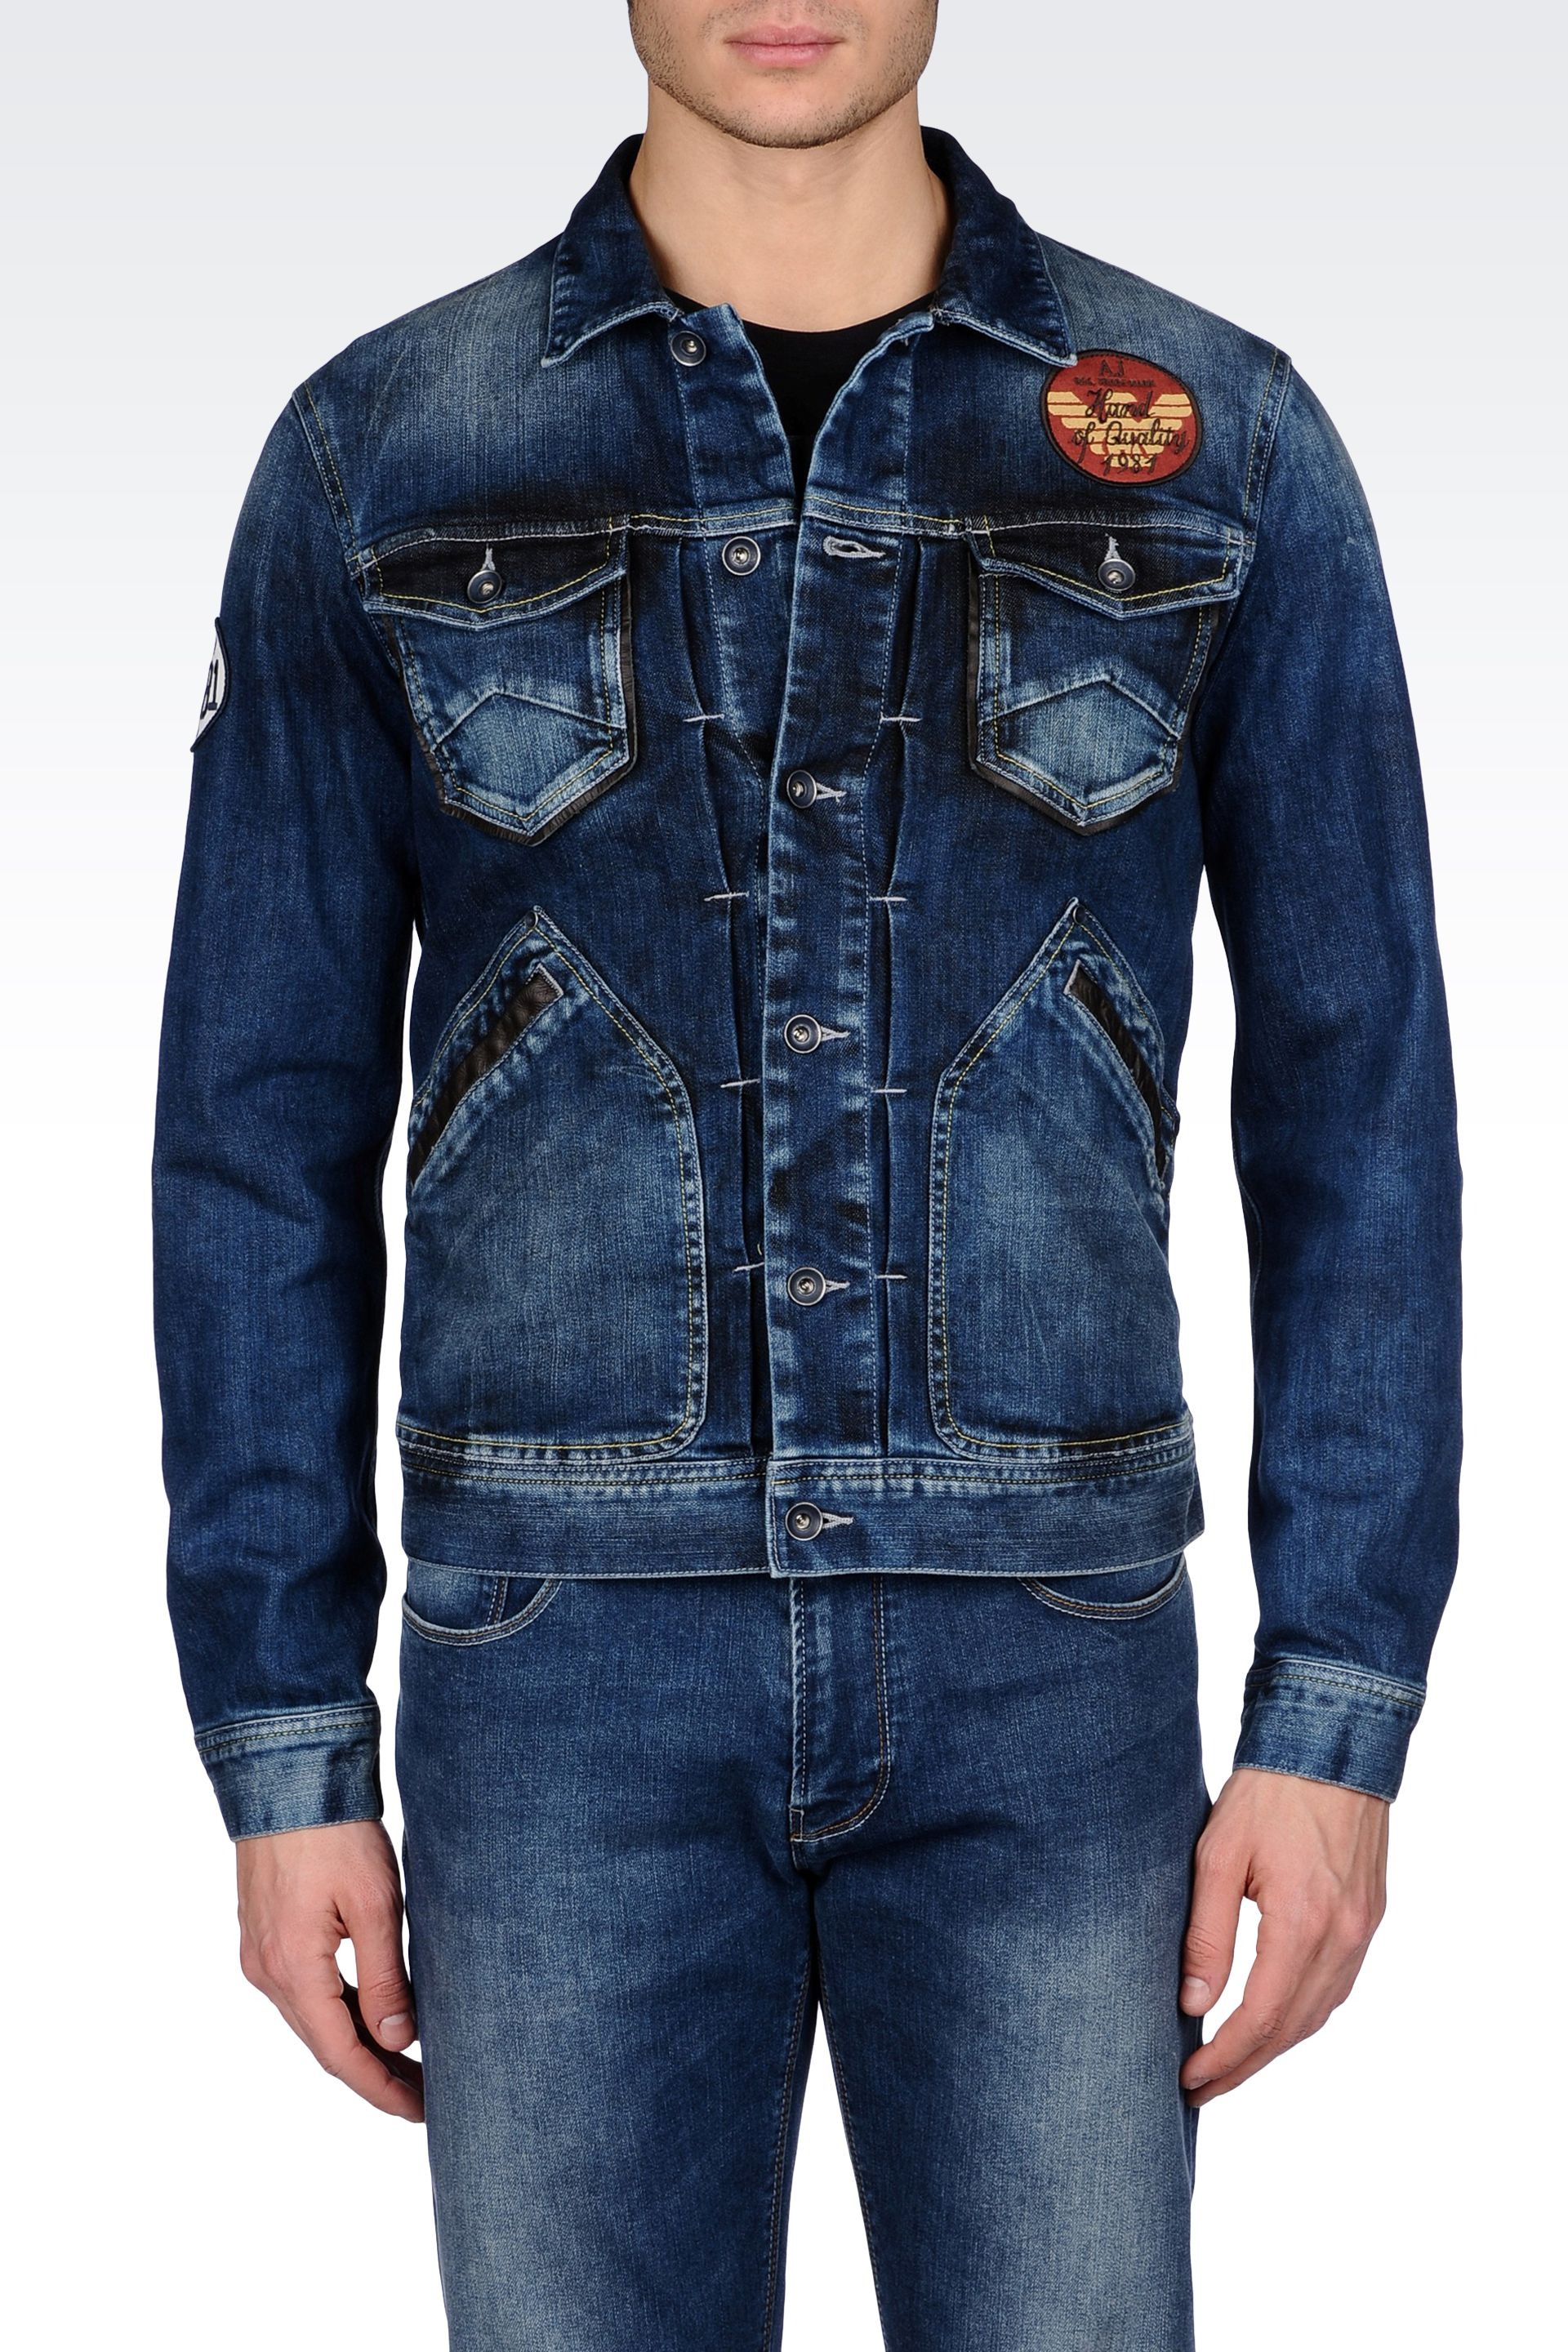 Armani Jeans Jacket in Medium Wash Denim in Blue for Men - Lyst